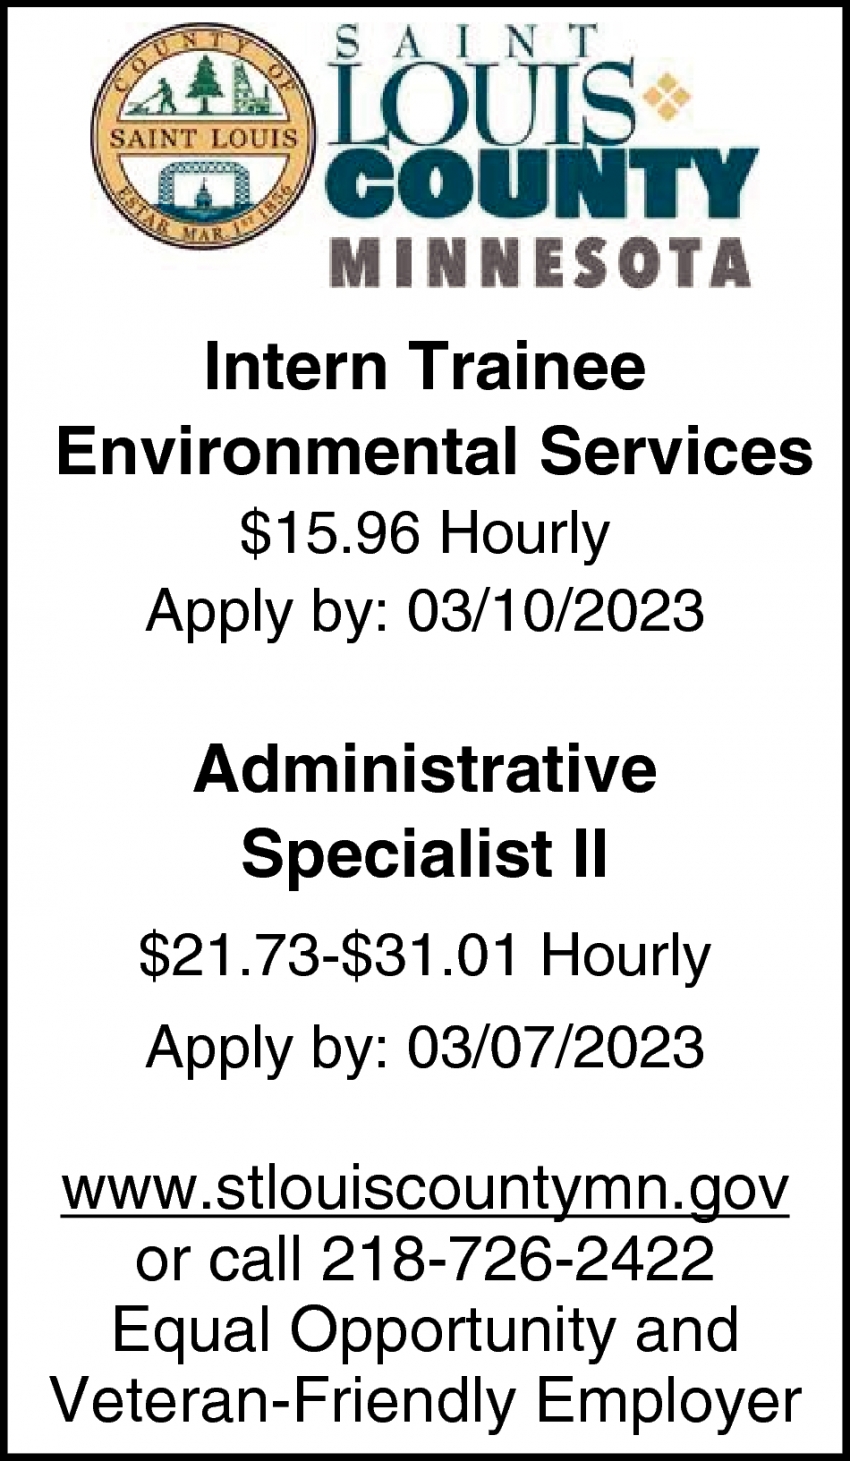 Intern Trainee Environmental Services, Administrative Specialist II